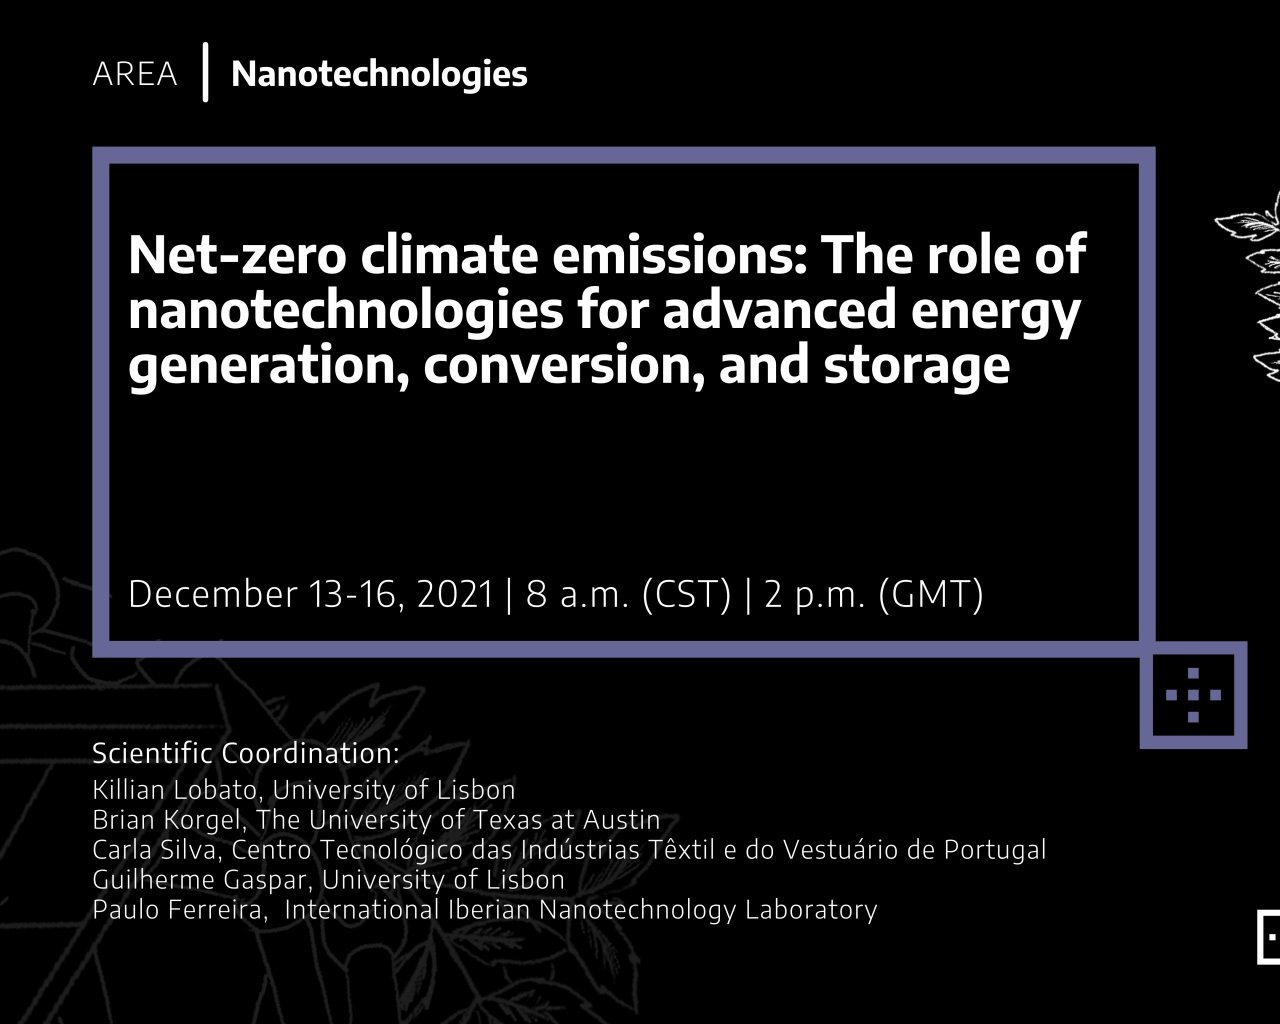 Online Advanced Training Program on Net-Zero Climate Emissions